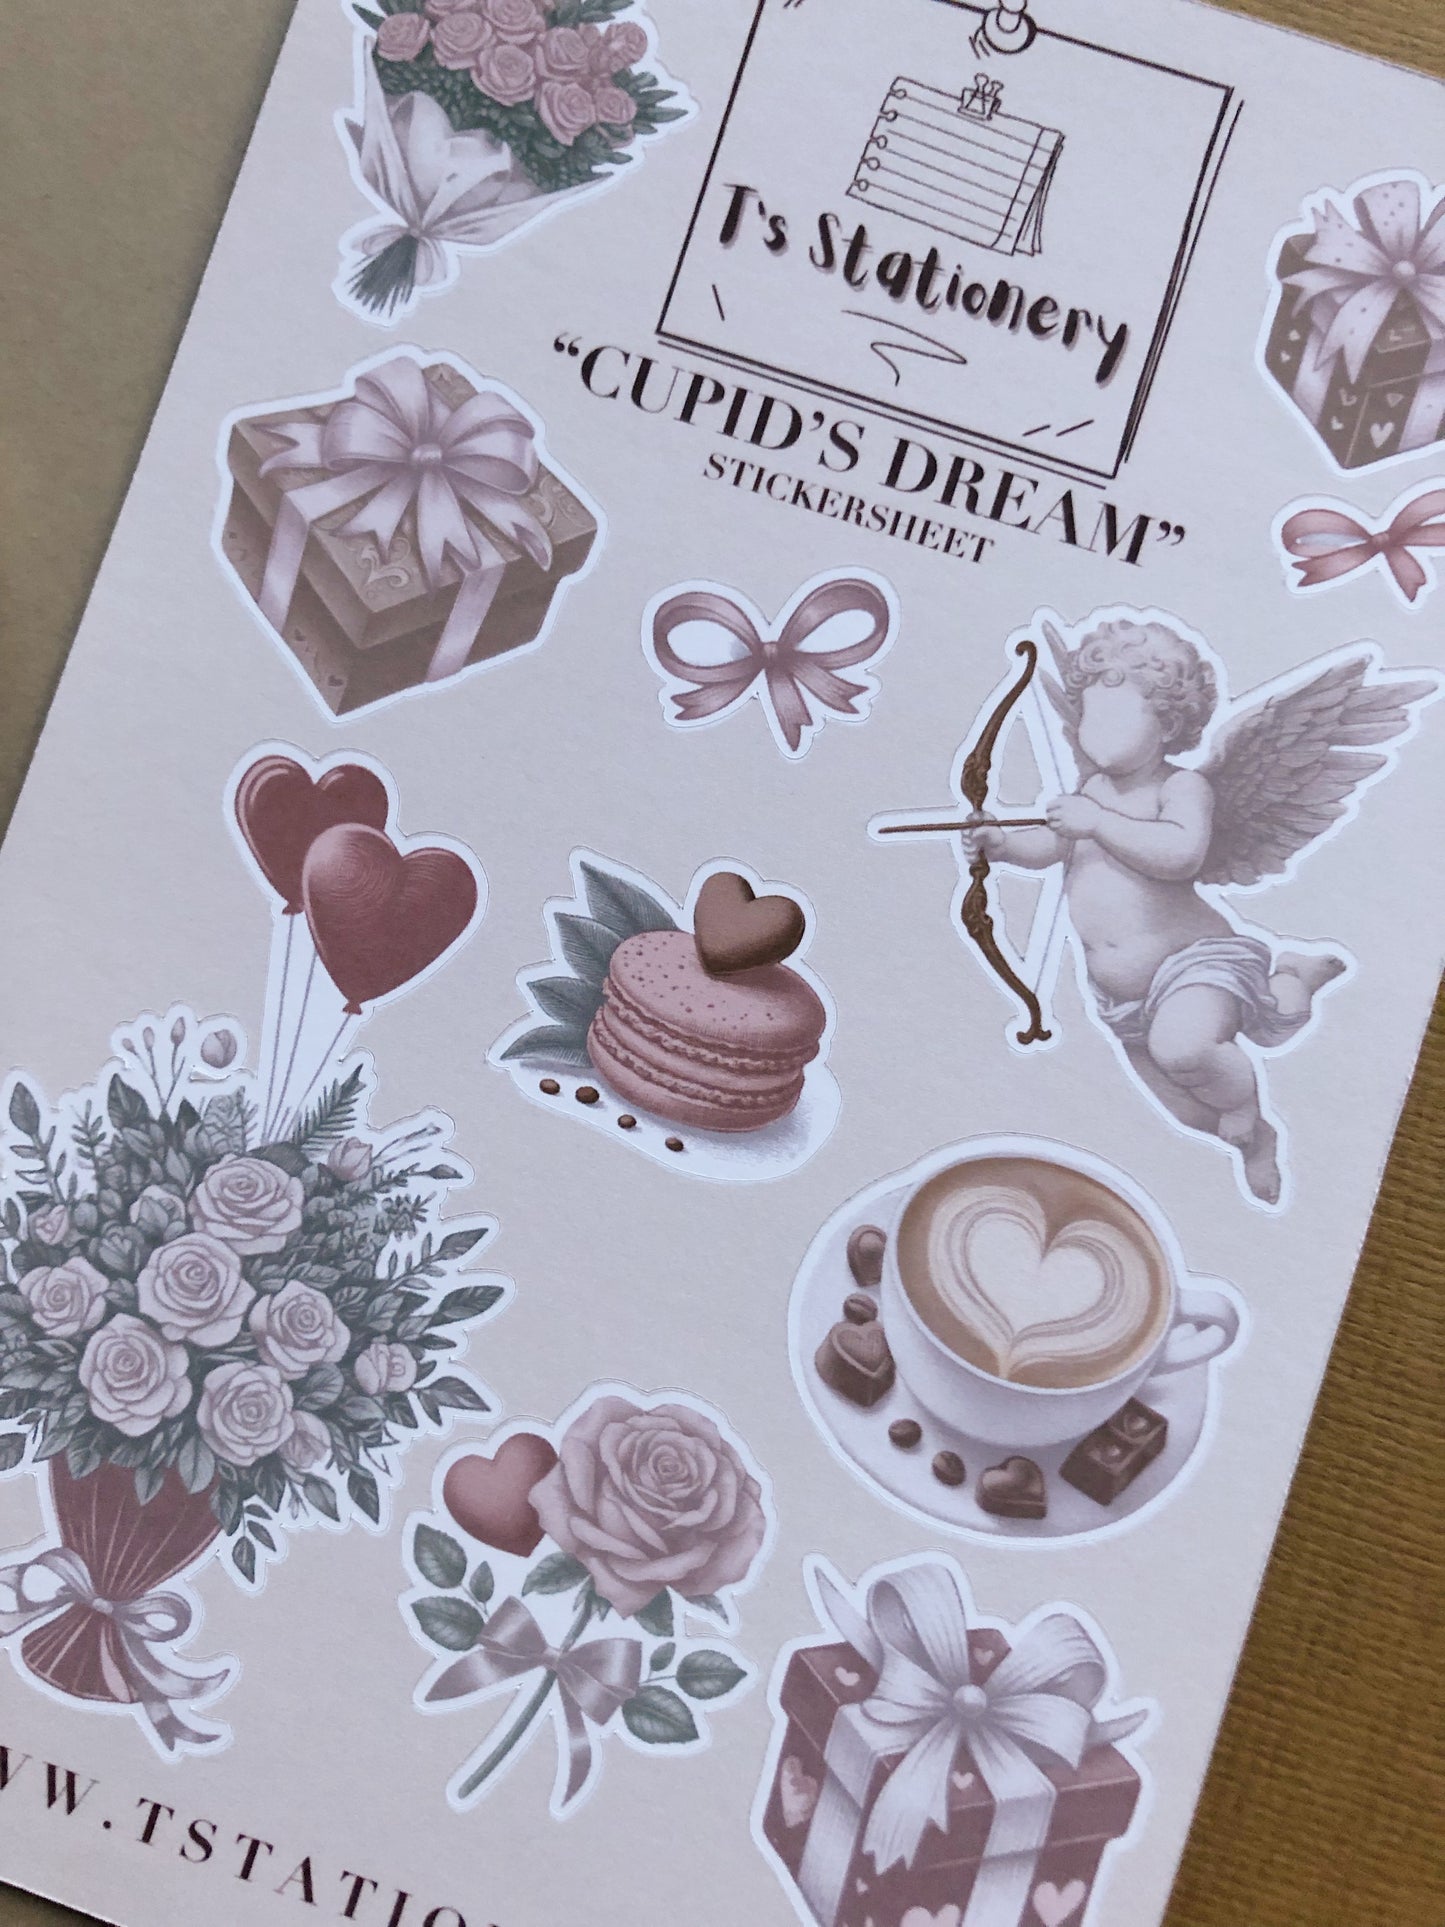 "Cupid's Dream" Sticker Sheet